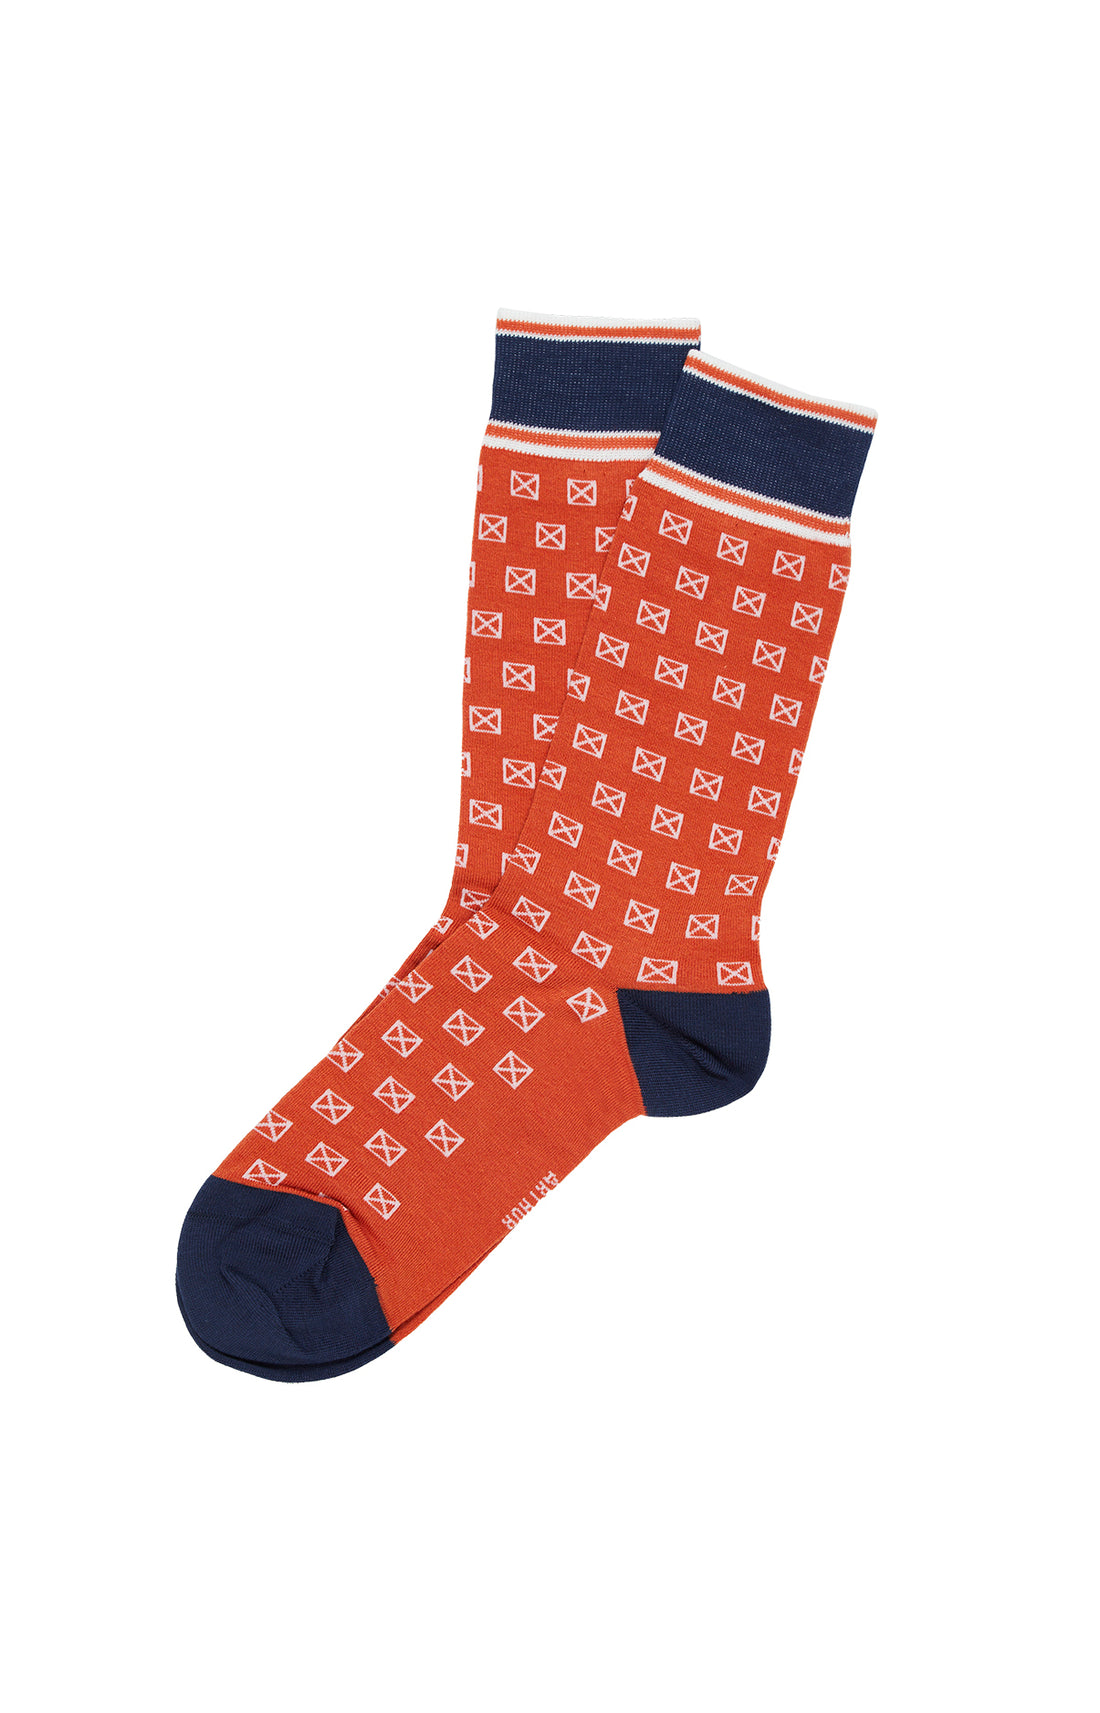 Orange Socks - Roland Garros